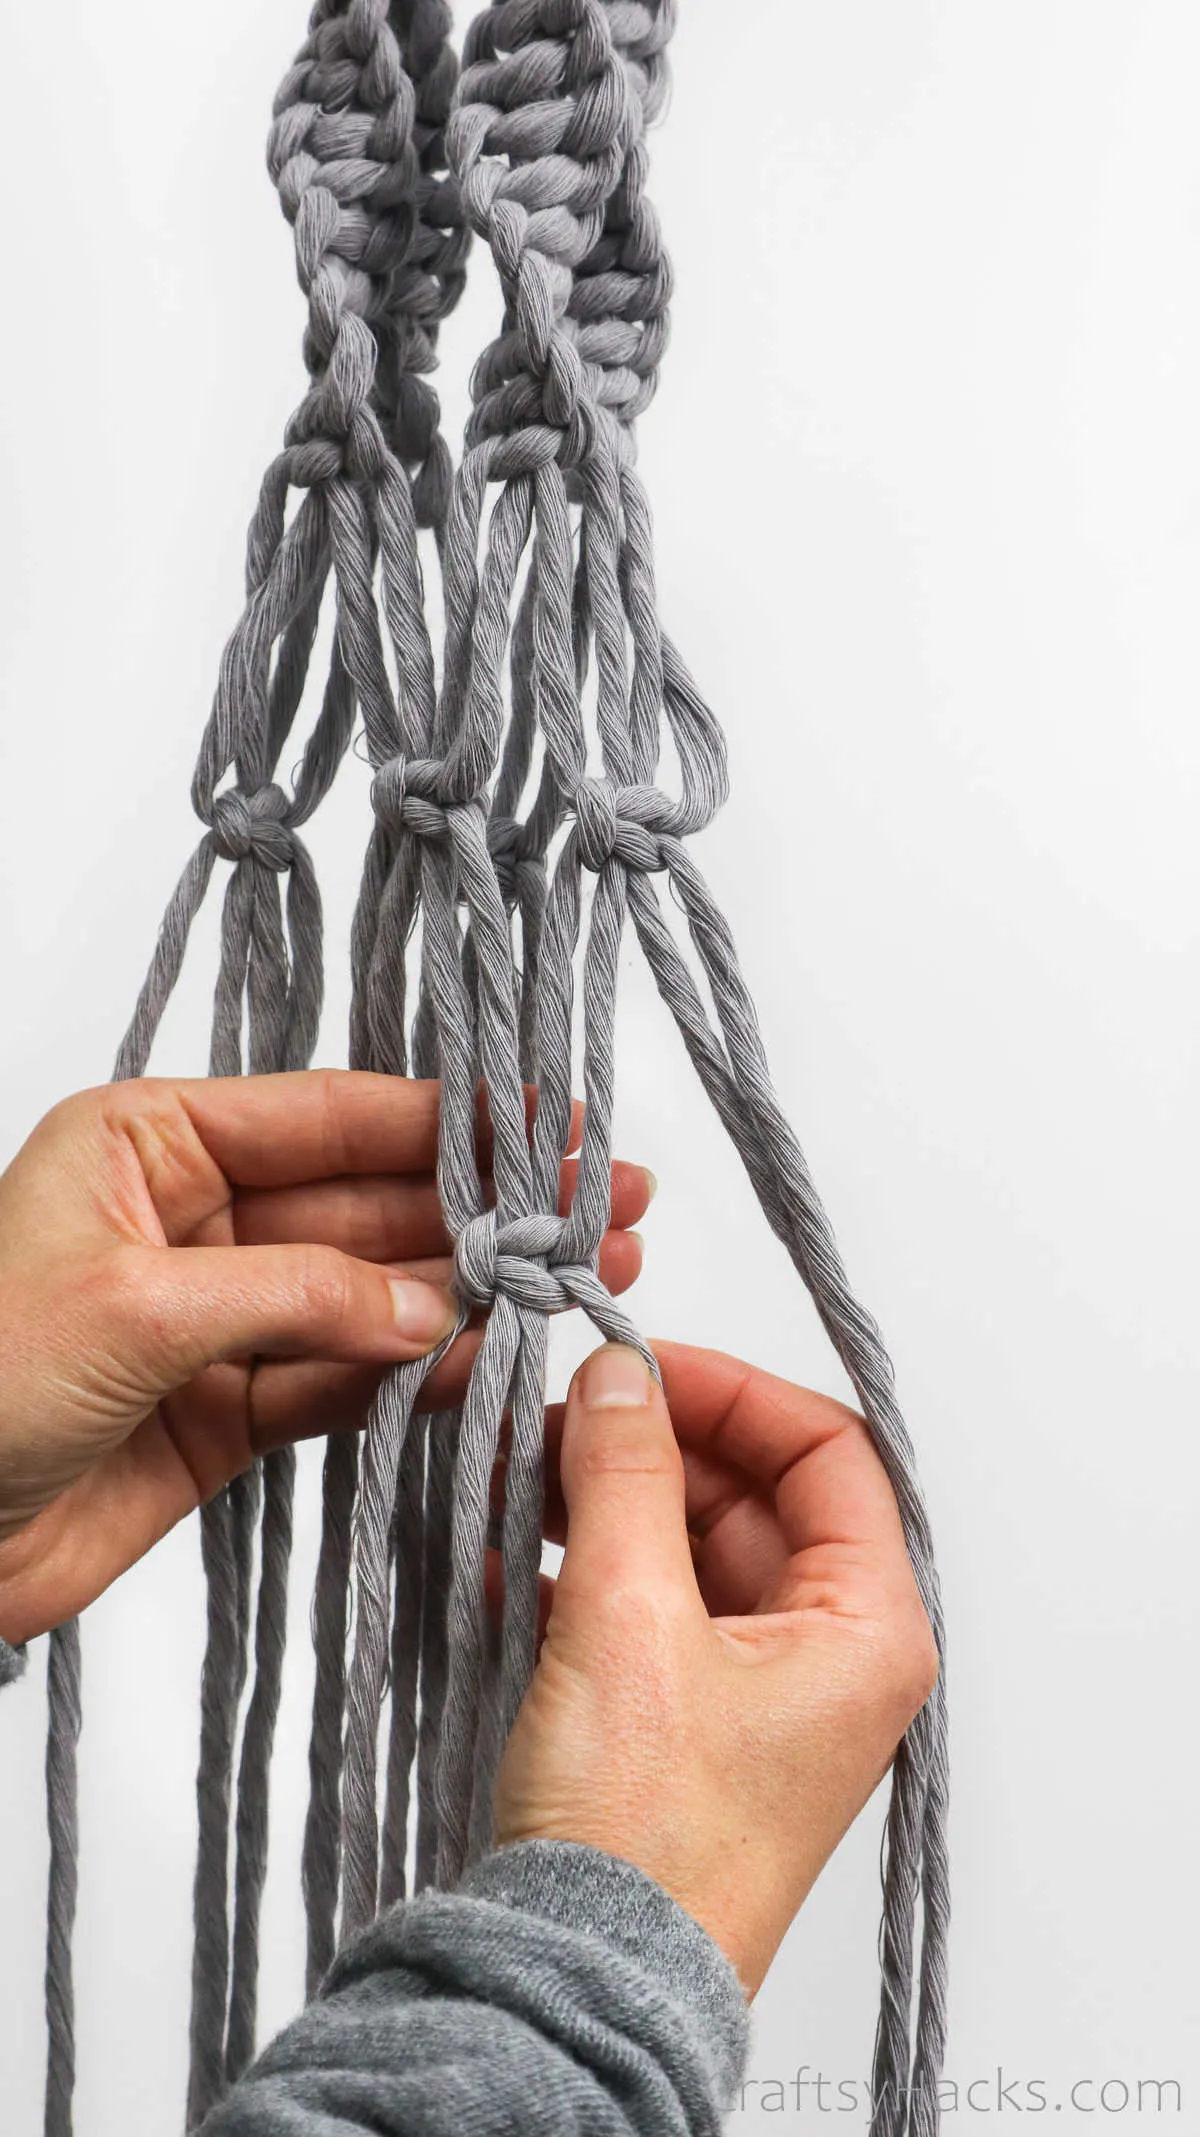 tying macrame knot